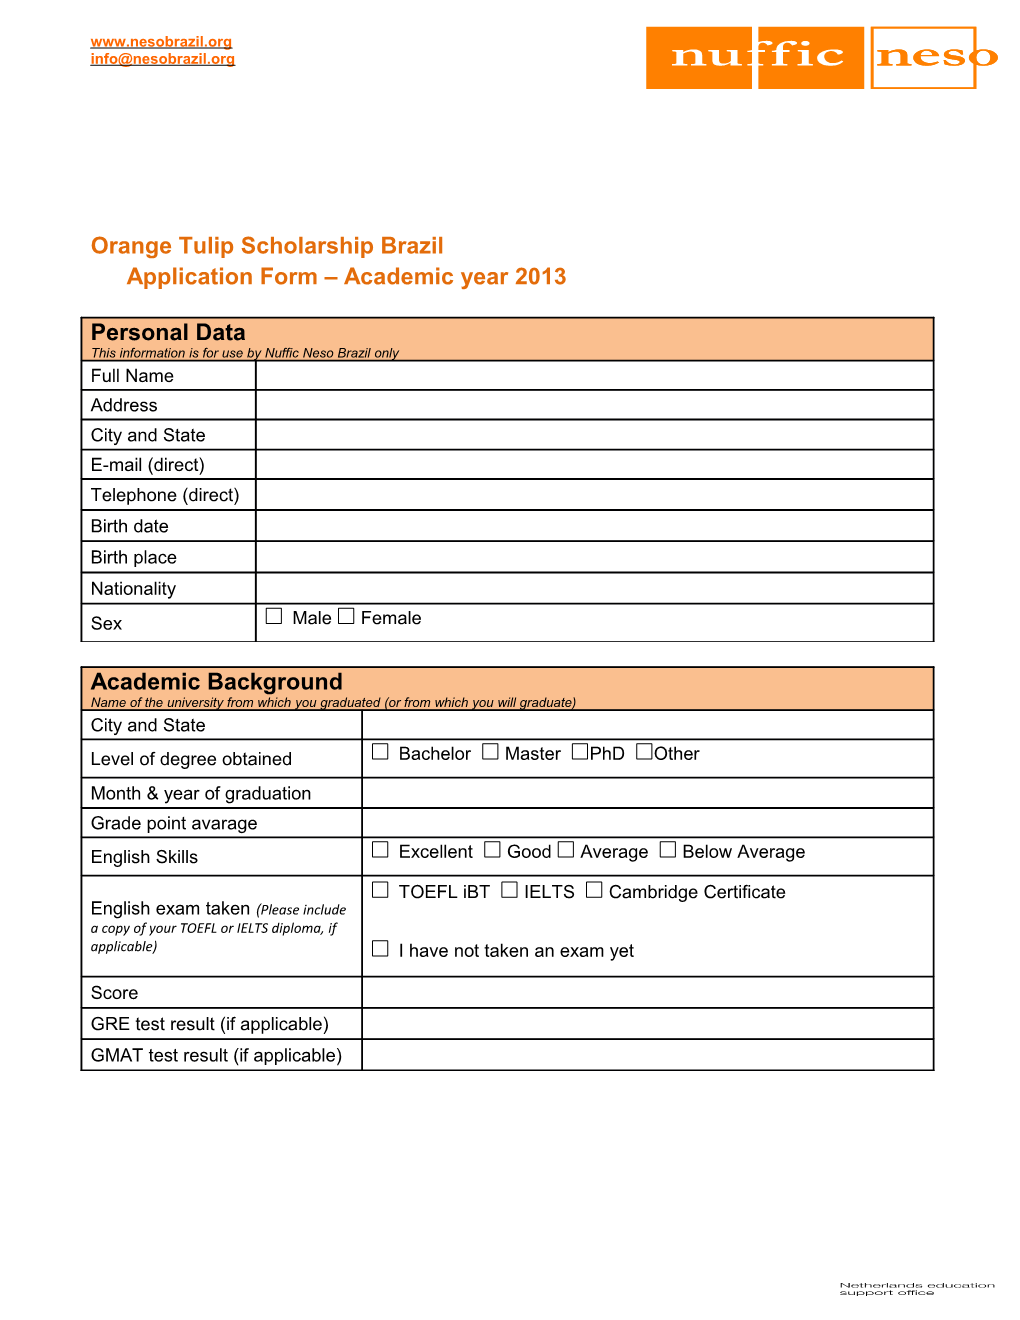 Orange Tulip Scholarship Brazilapplication Form Academic Year 2013